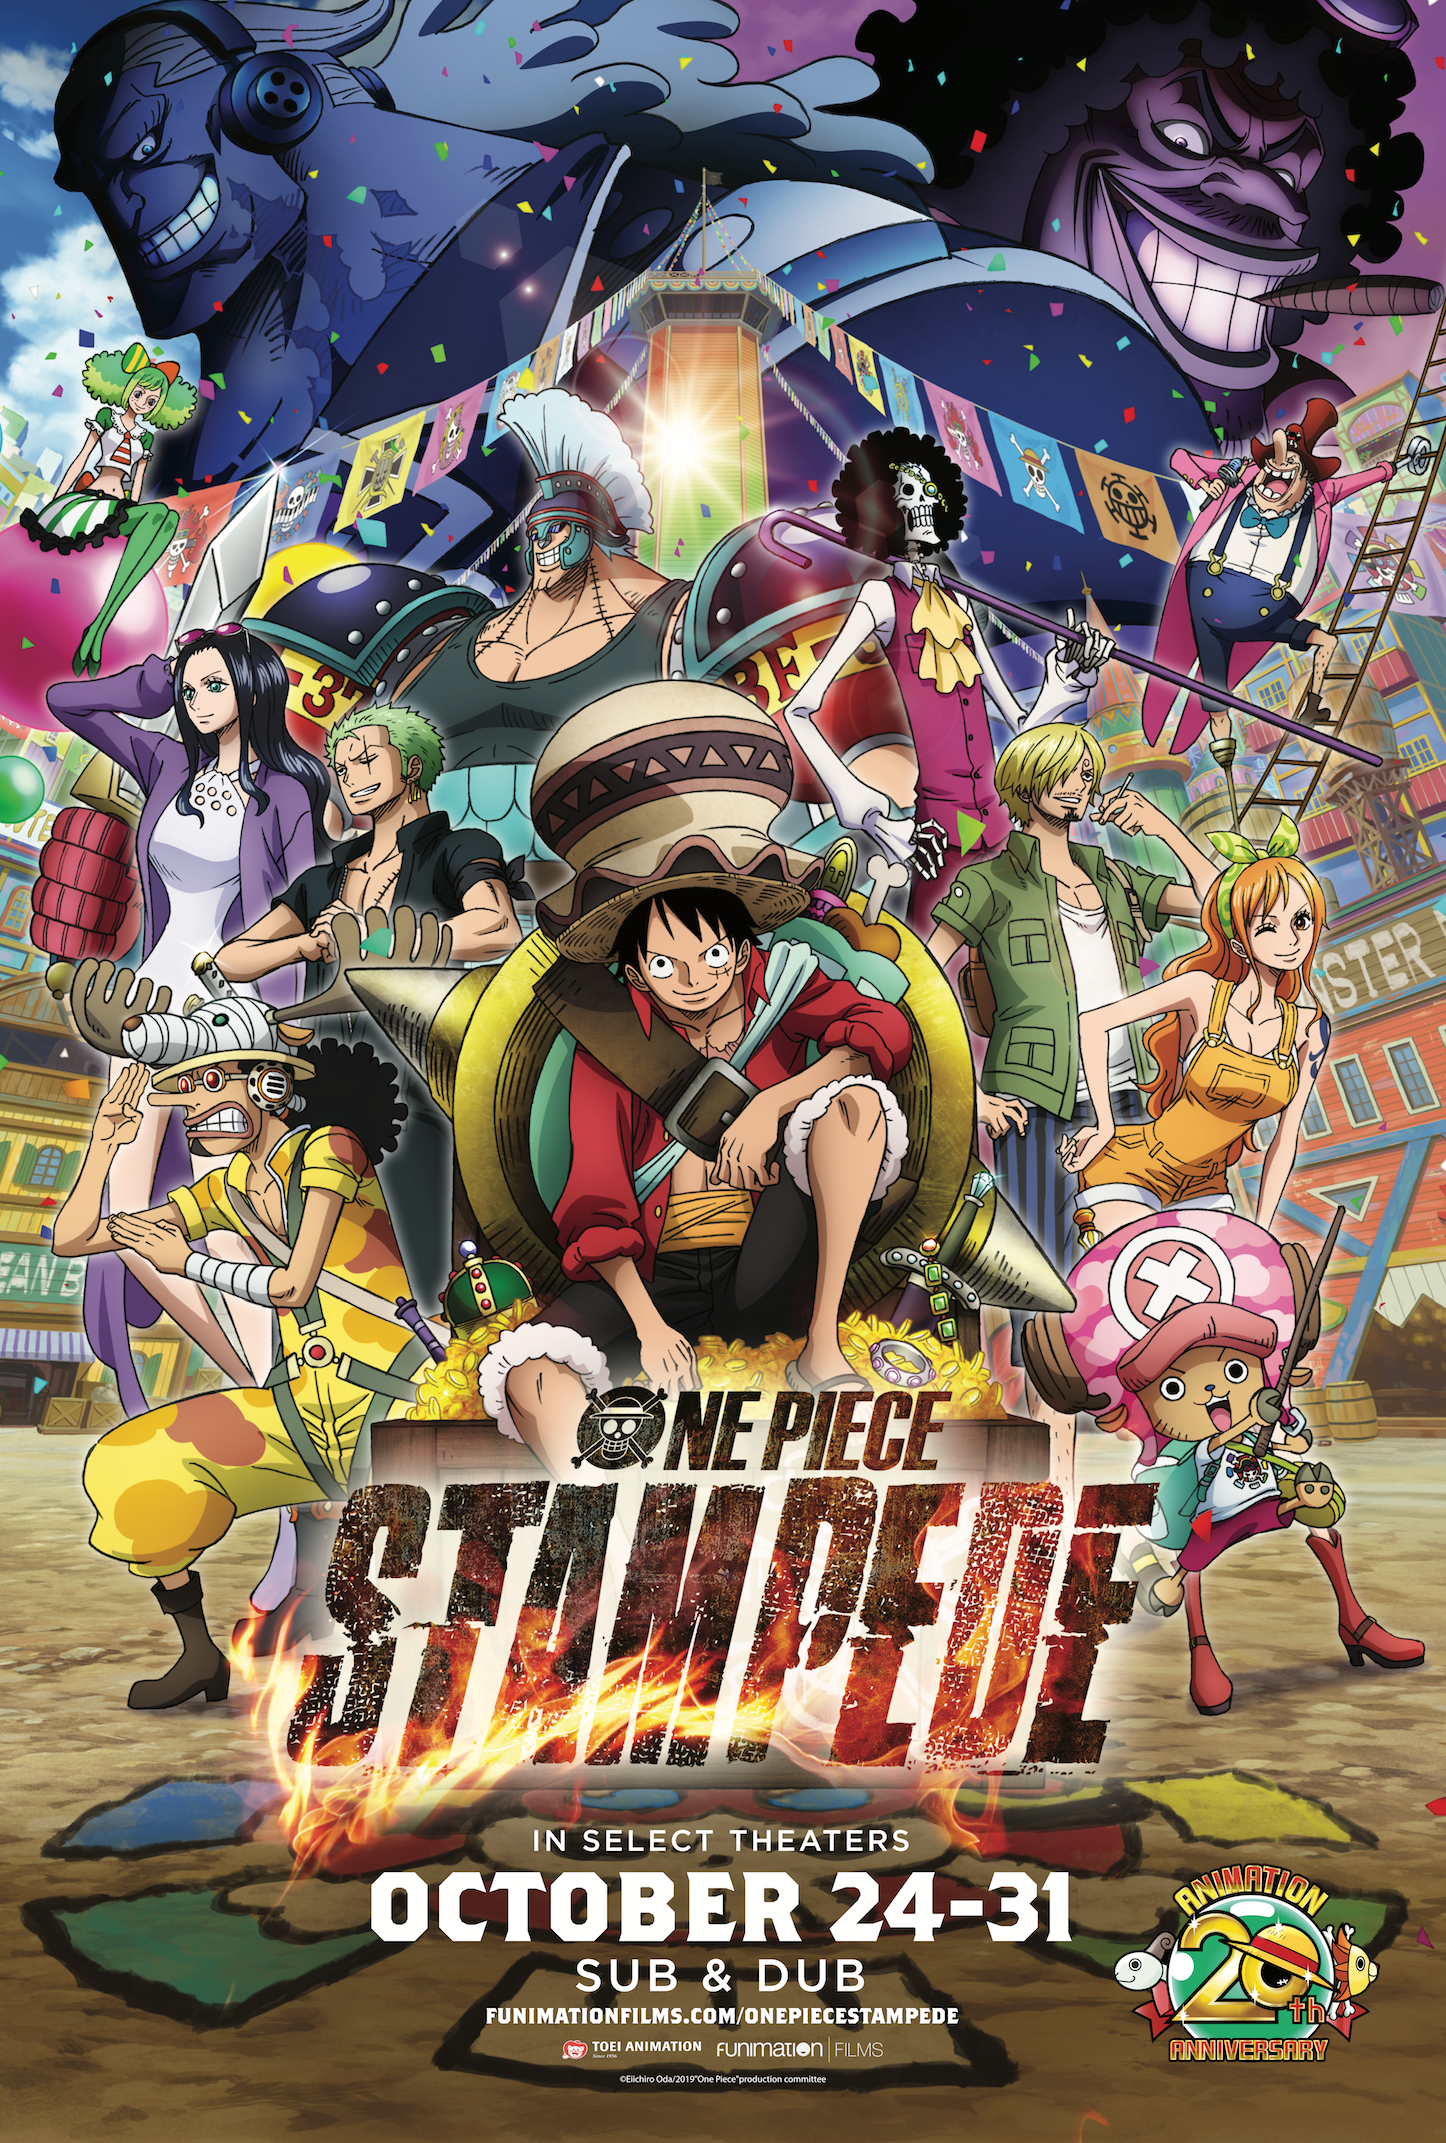 One Piece Avatar Creator